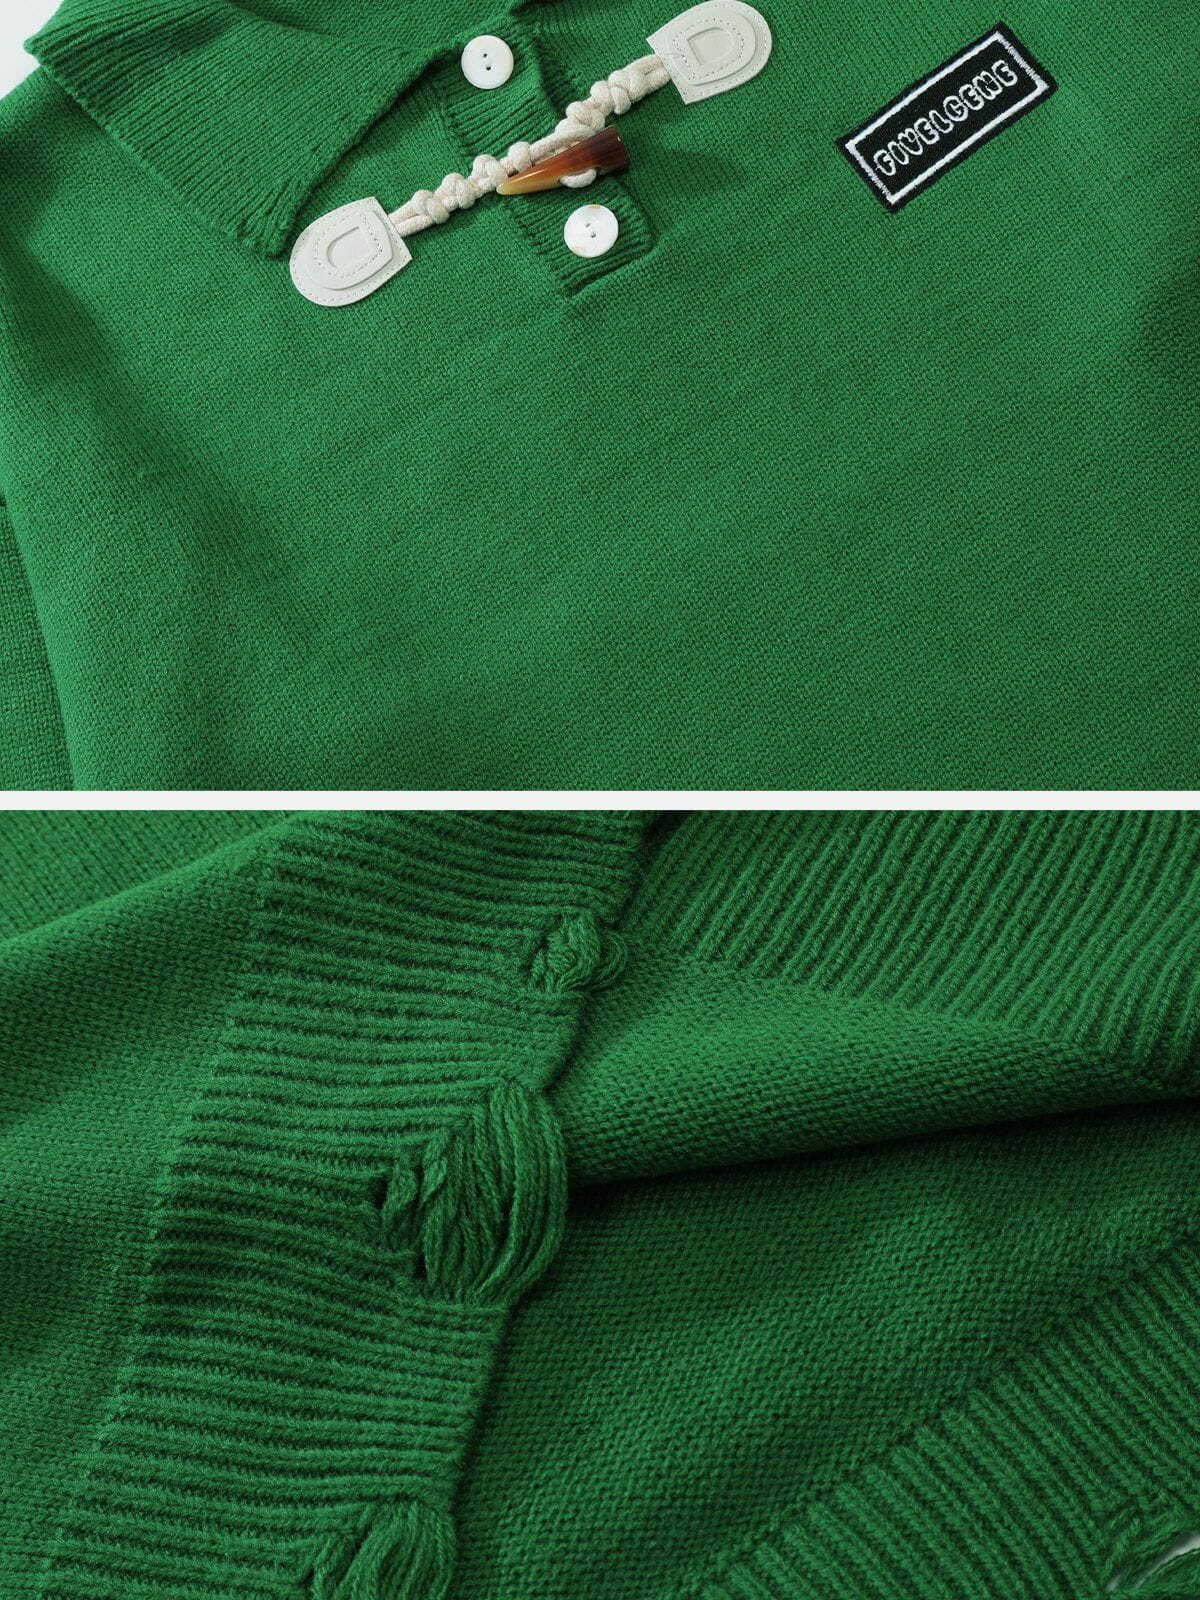 ox horn button polo sweater edgy & retro streetwear 4771